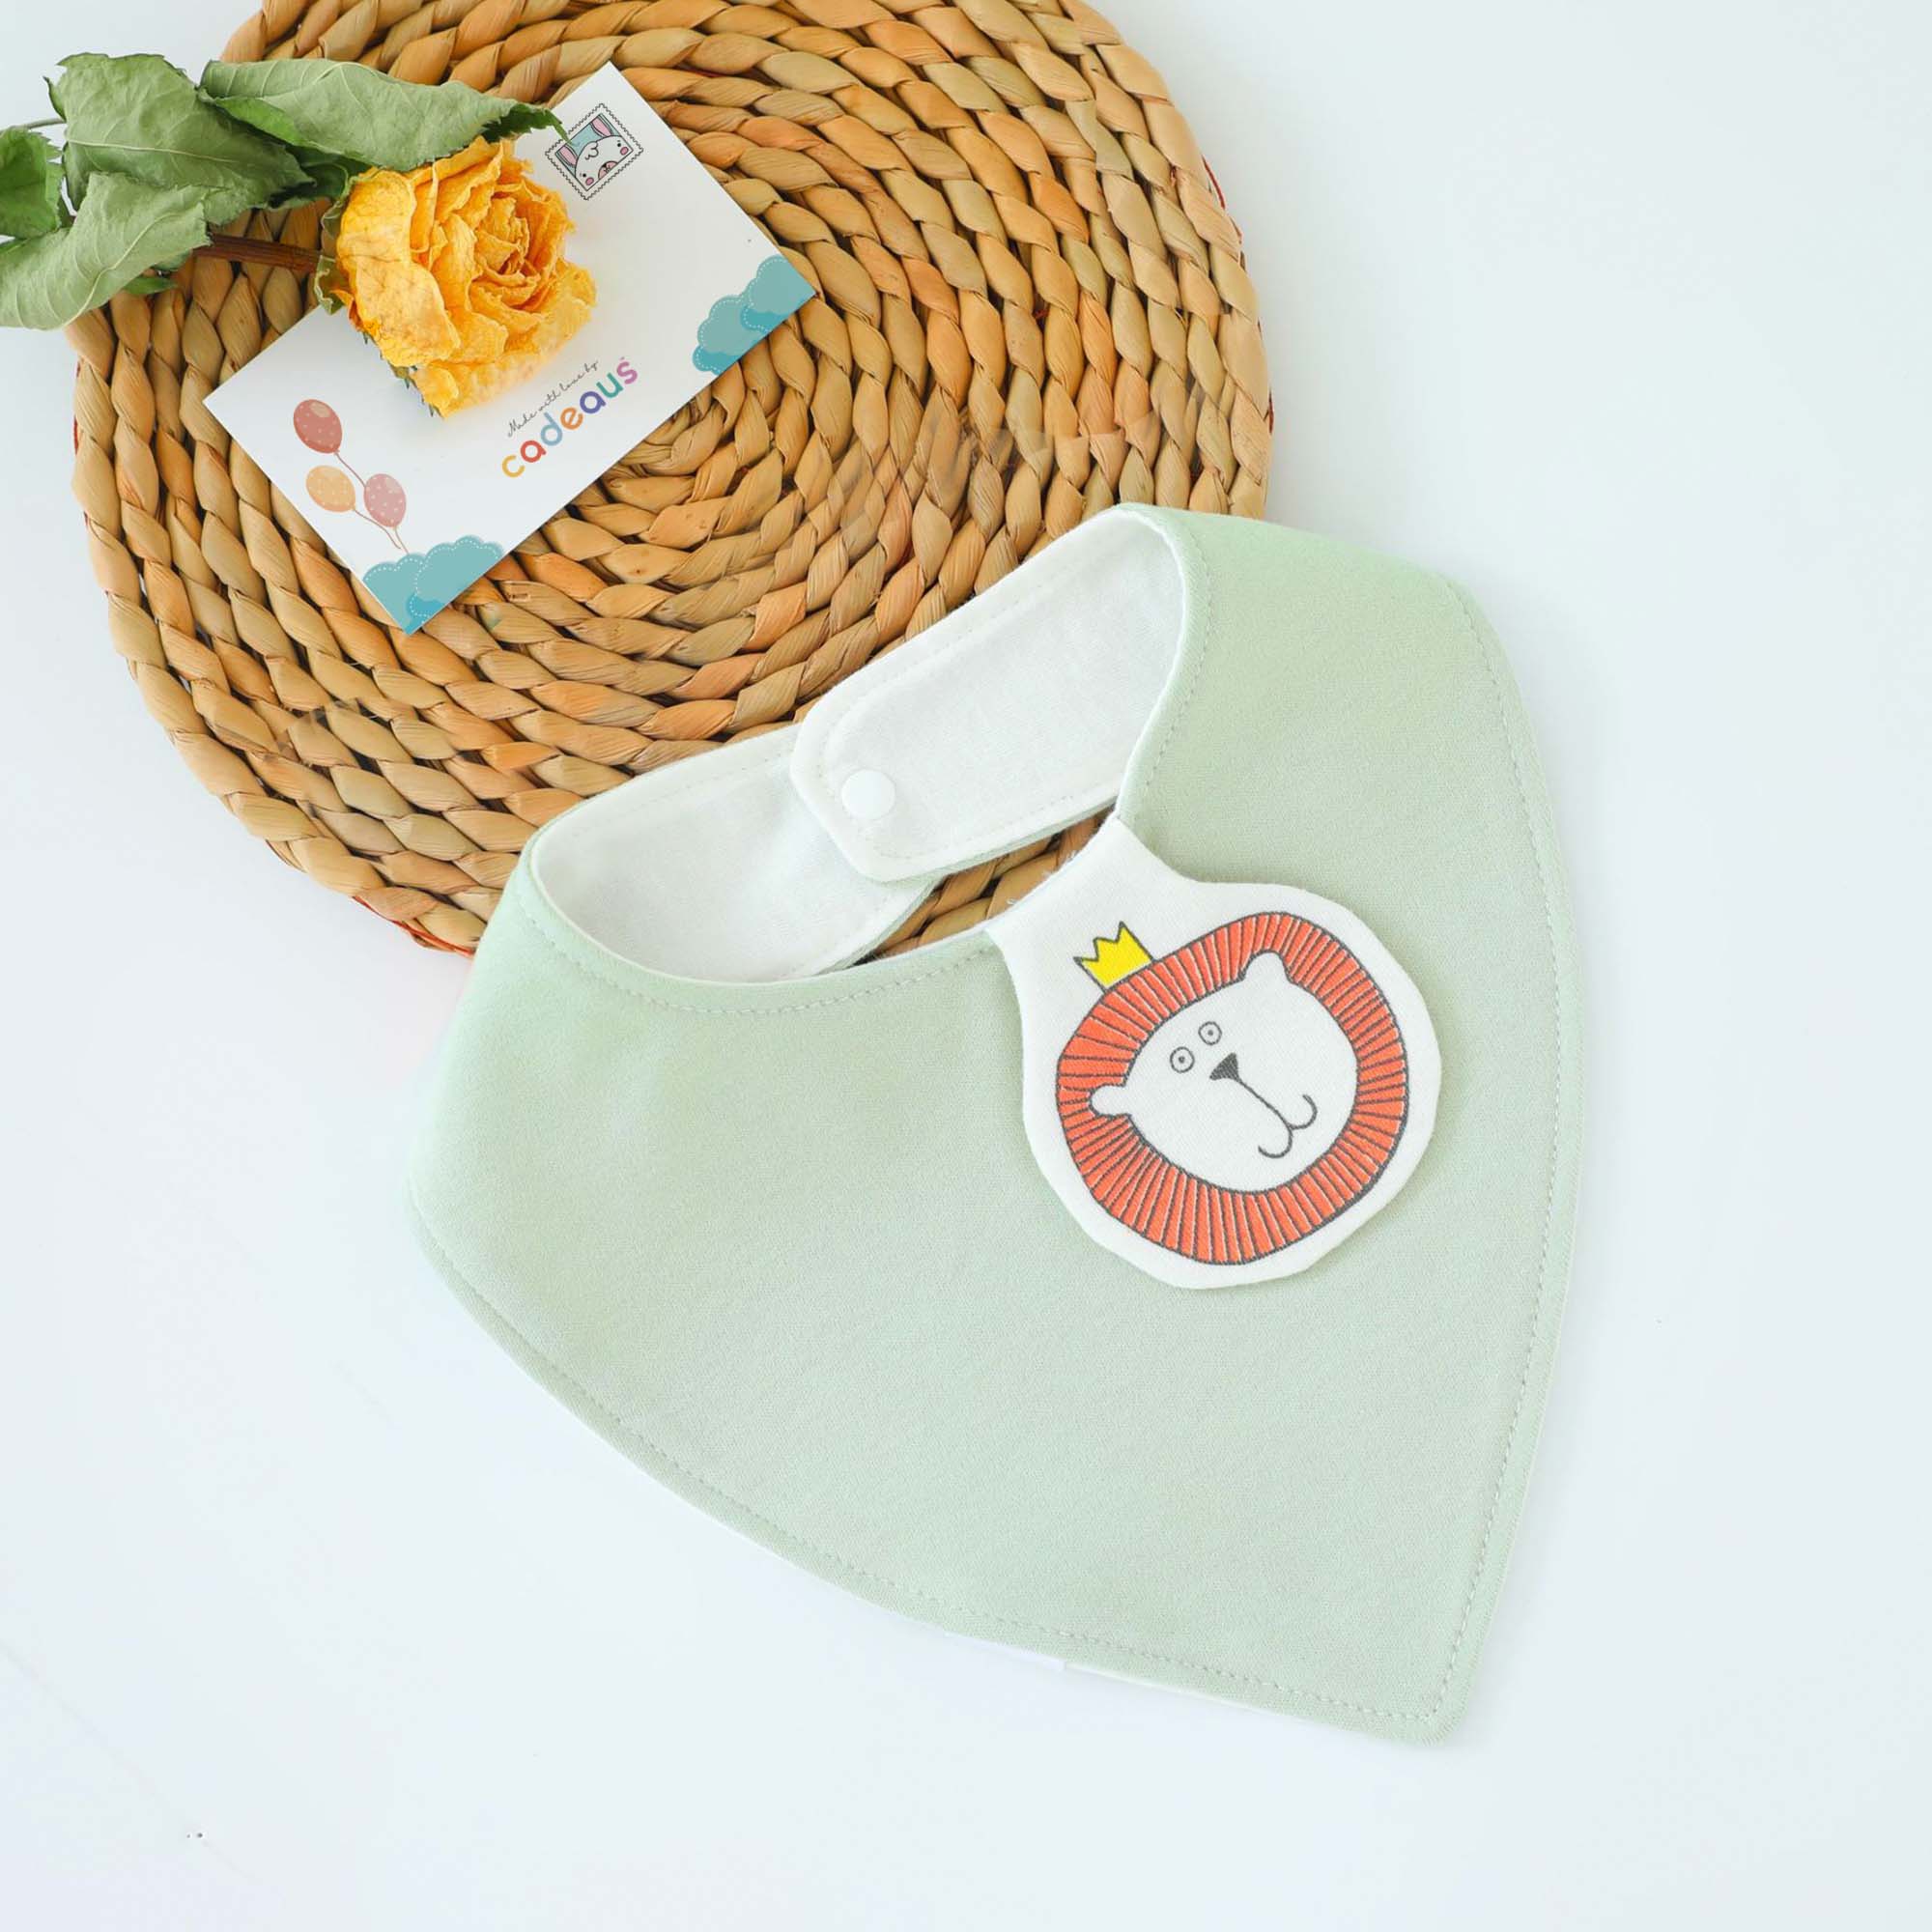 A green lion design baby bib with Cadeaus gift card